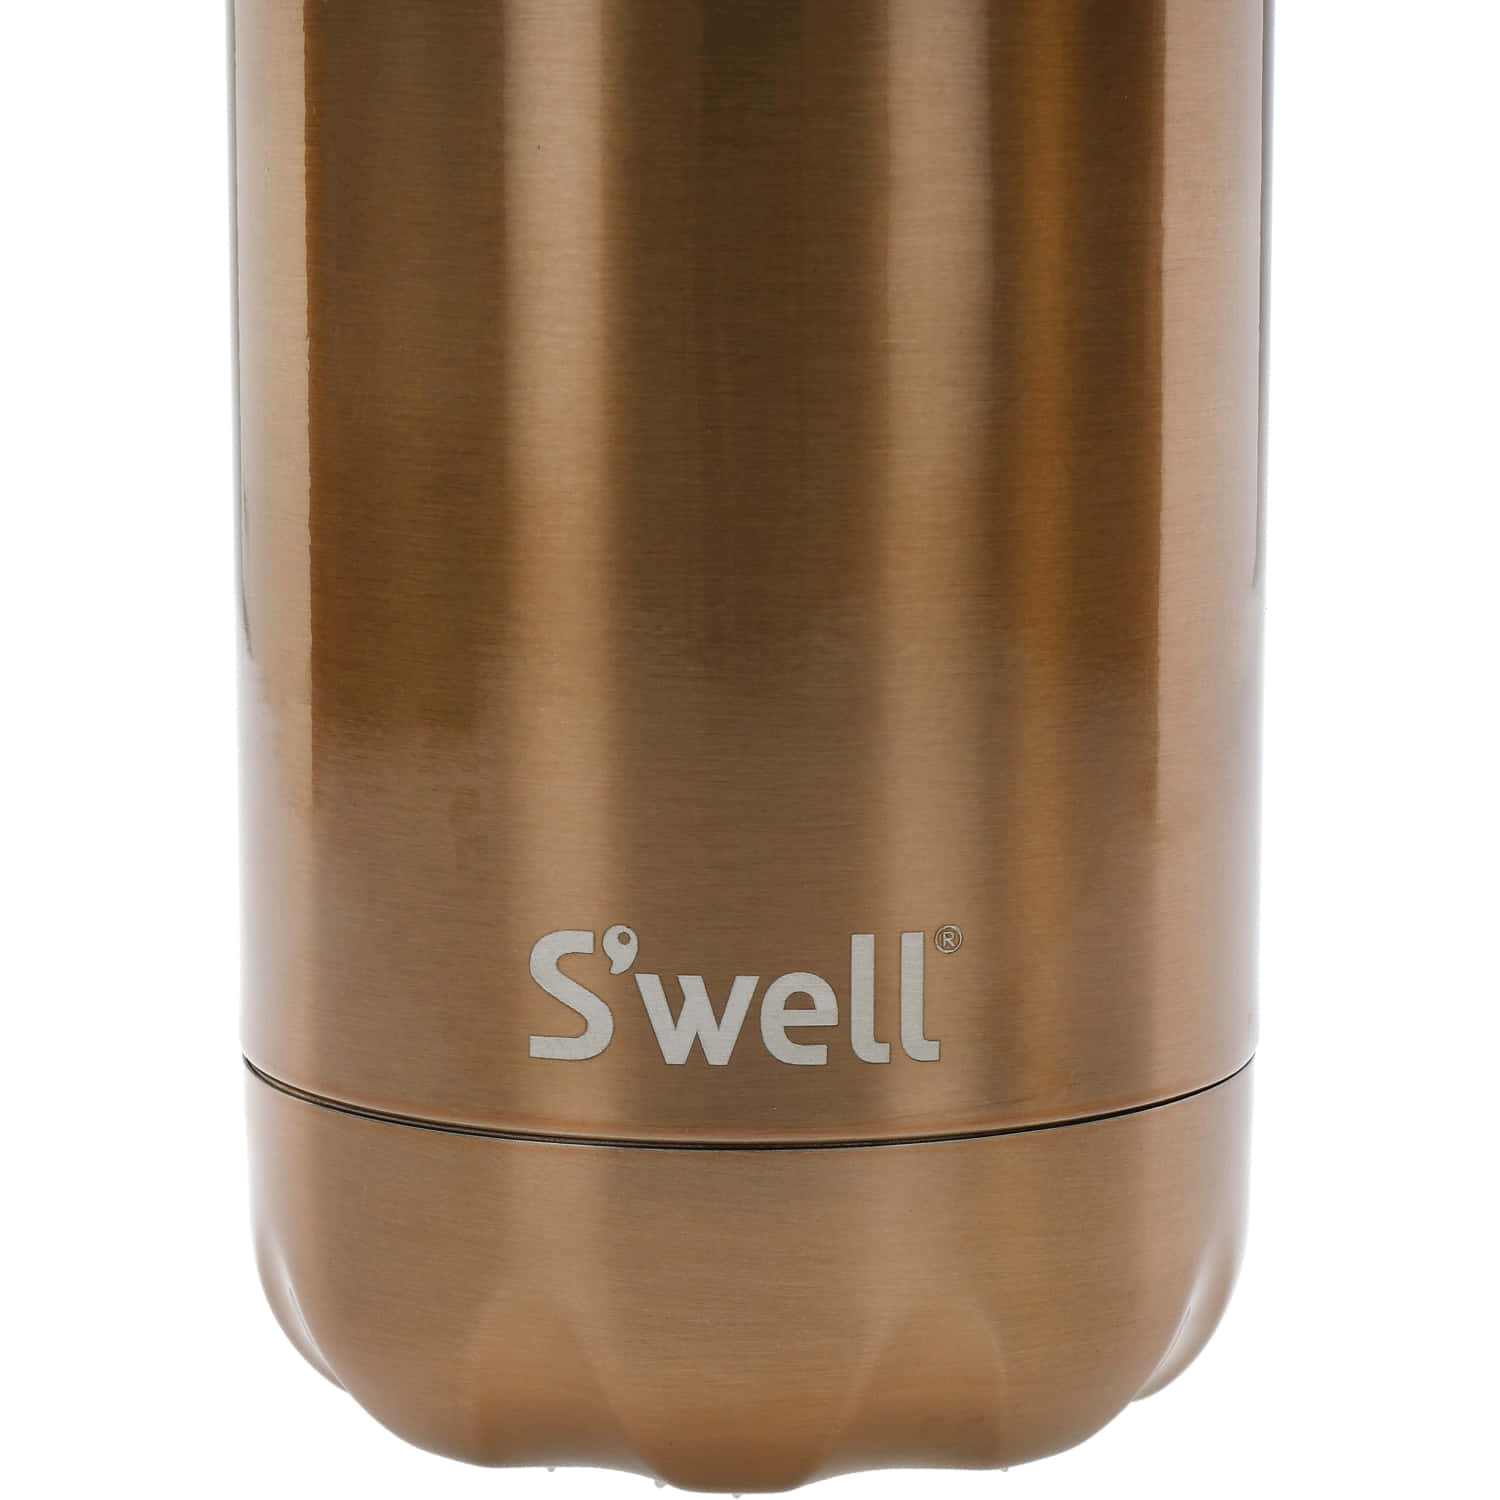 S'well Pyrite - Water Bottle 750ml